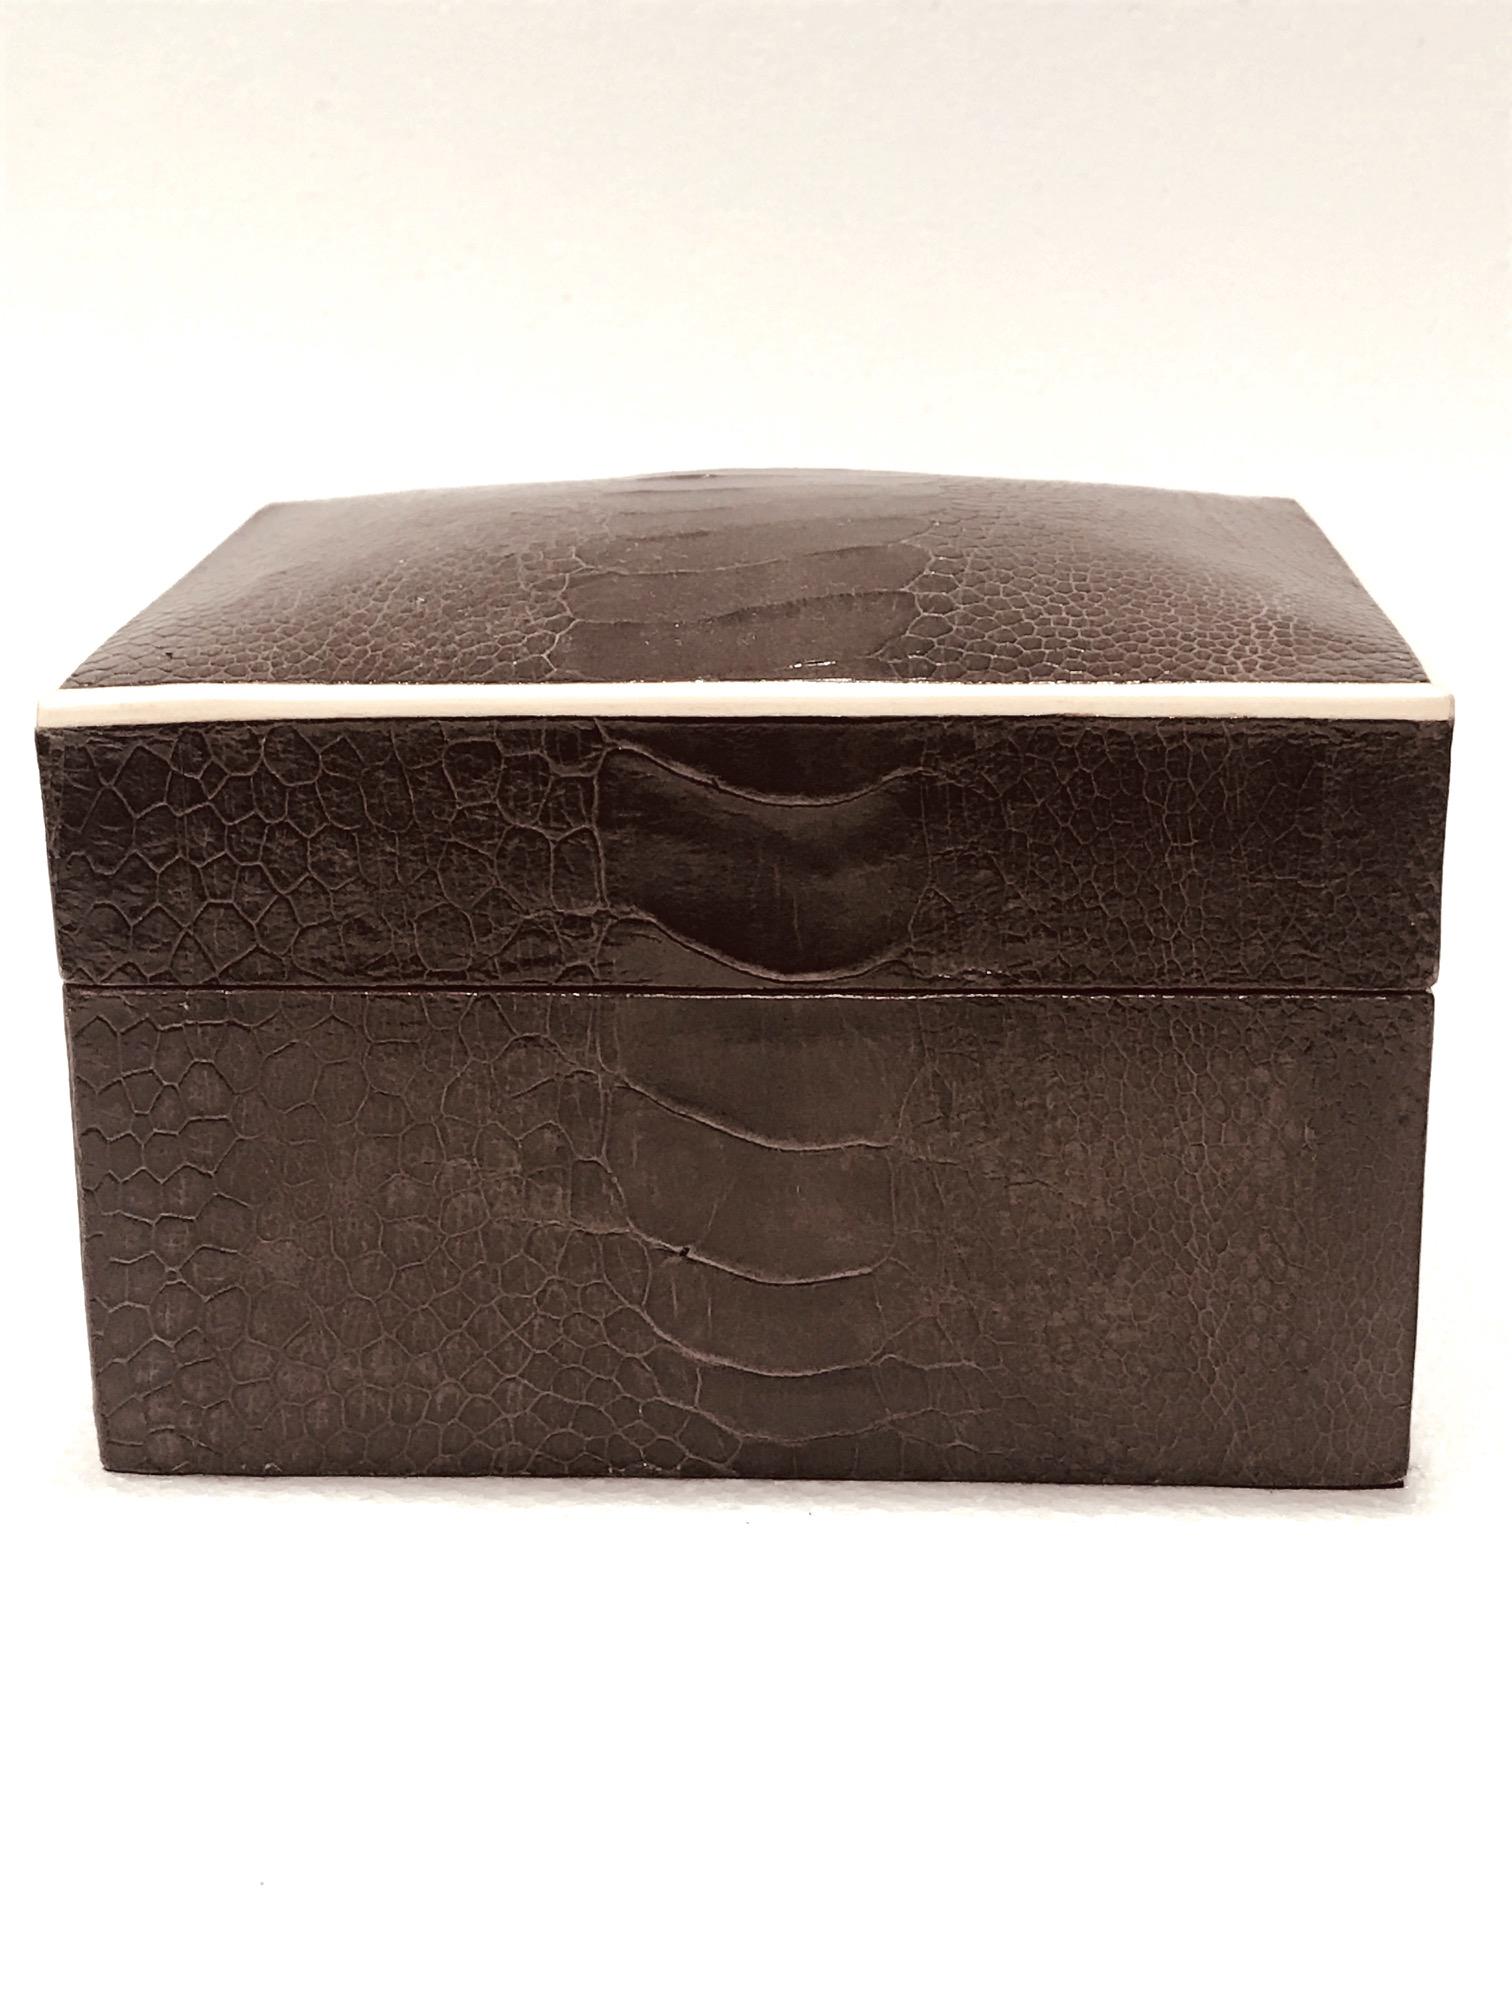 Organic Modern Vintage R&Y Augousti Decorative Box in Brown Ostrich Leather and Bone, c. 2000